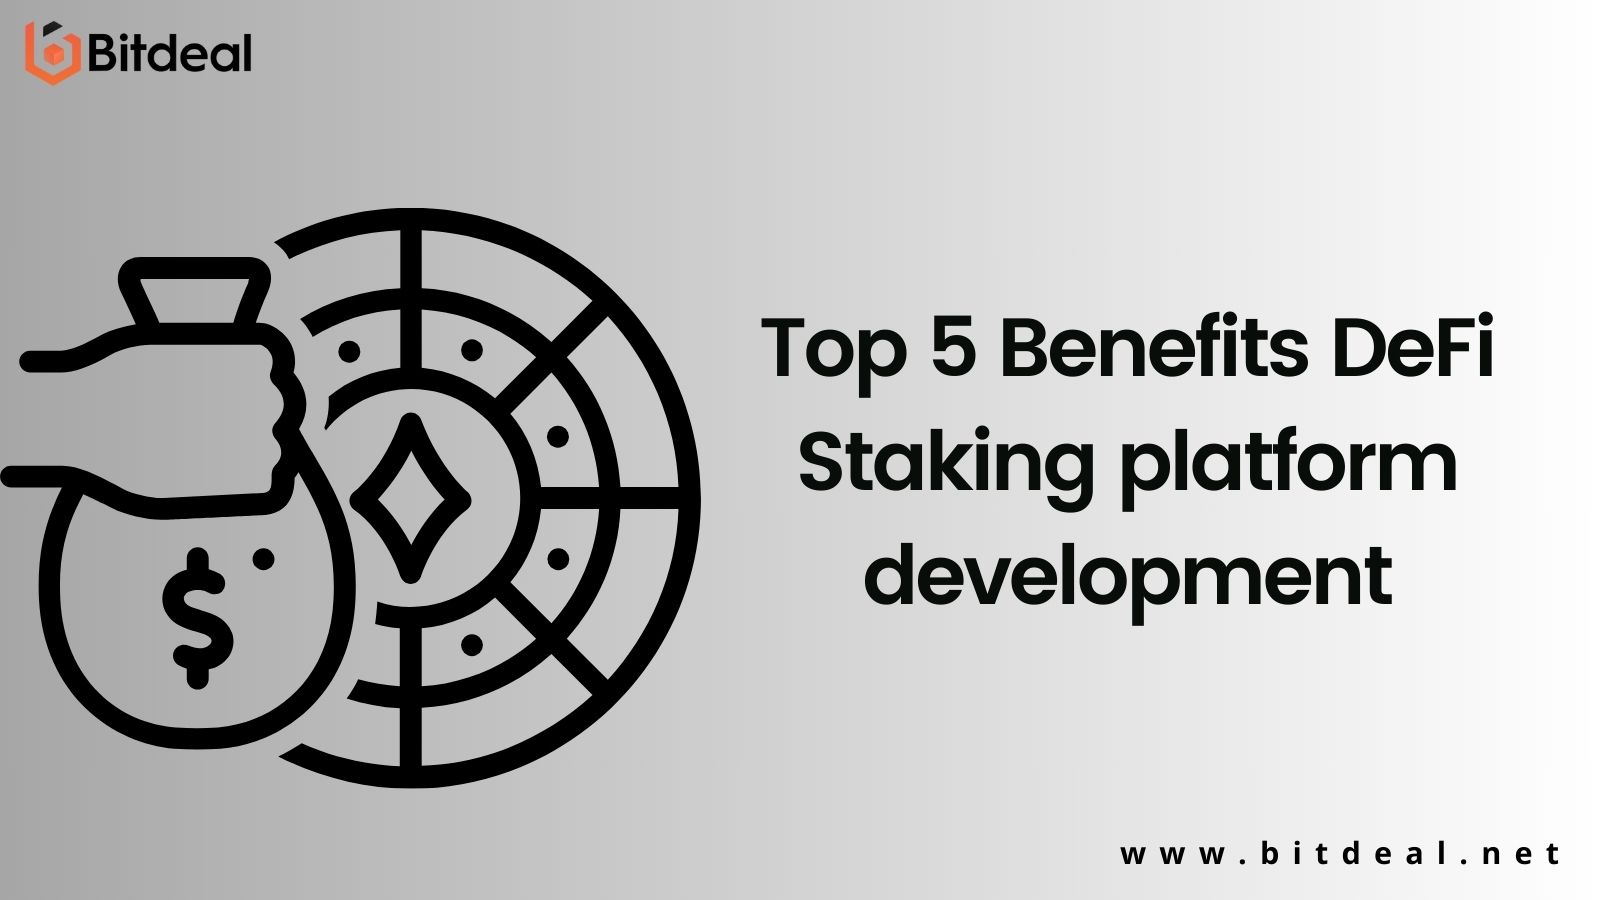 Top 5 Benefits DeFi Staking platform development